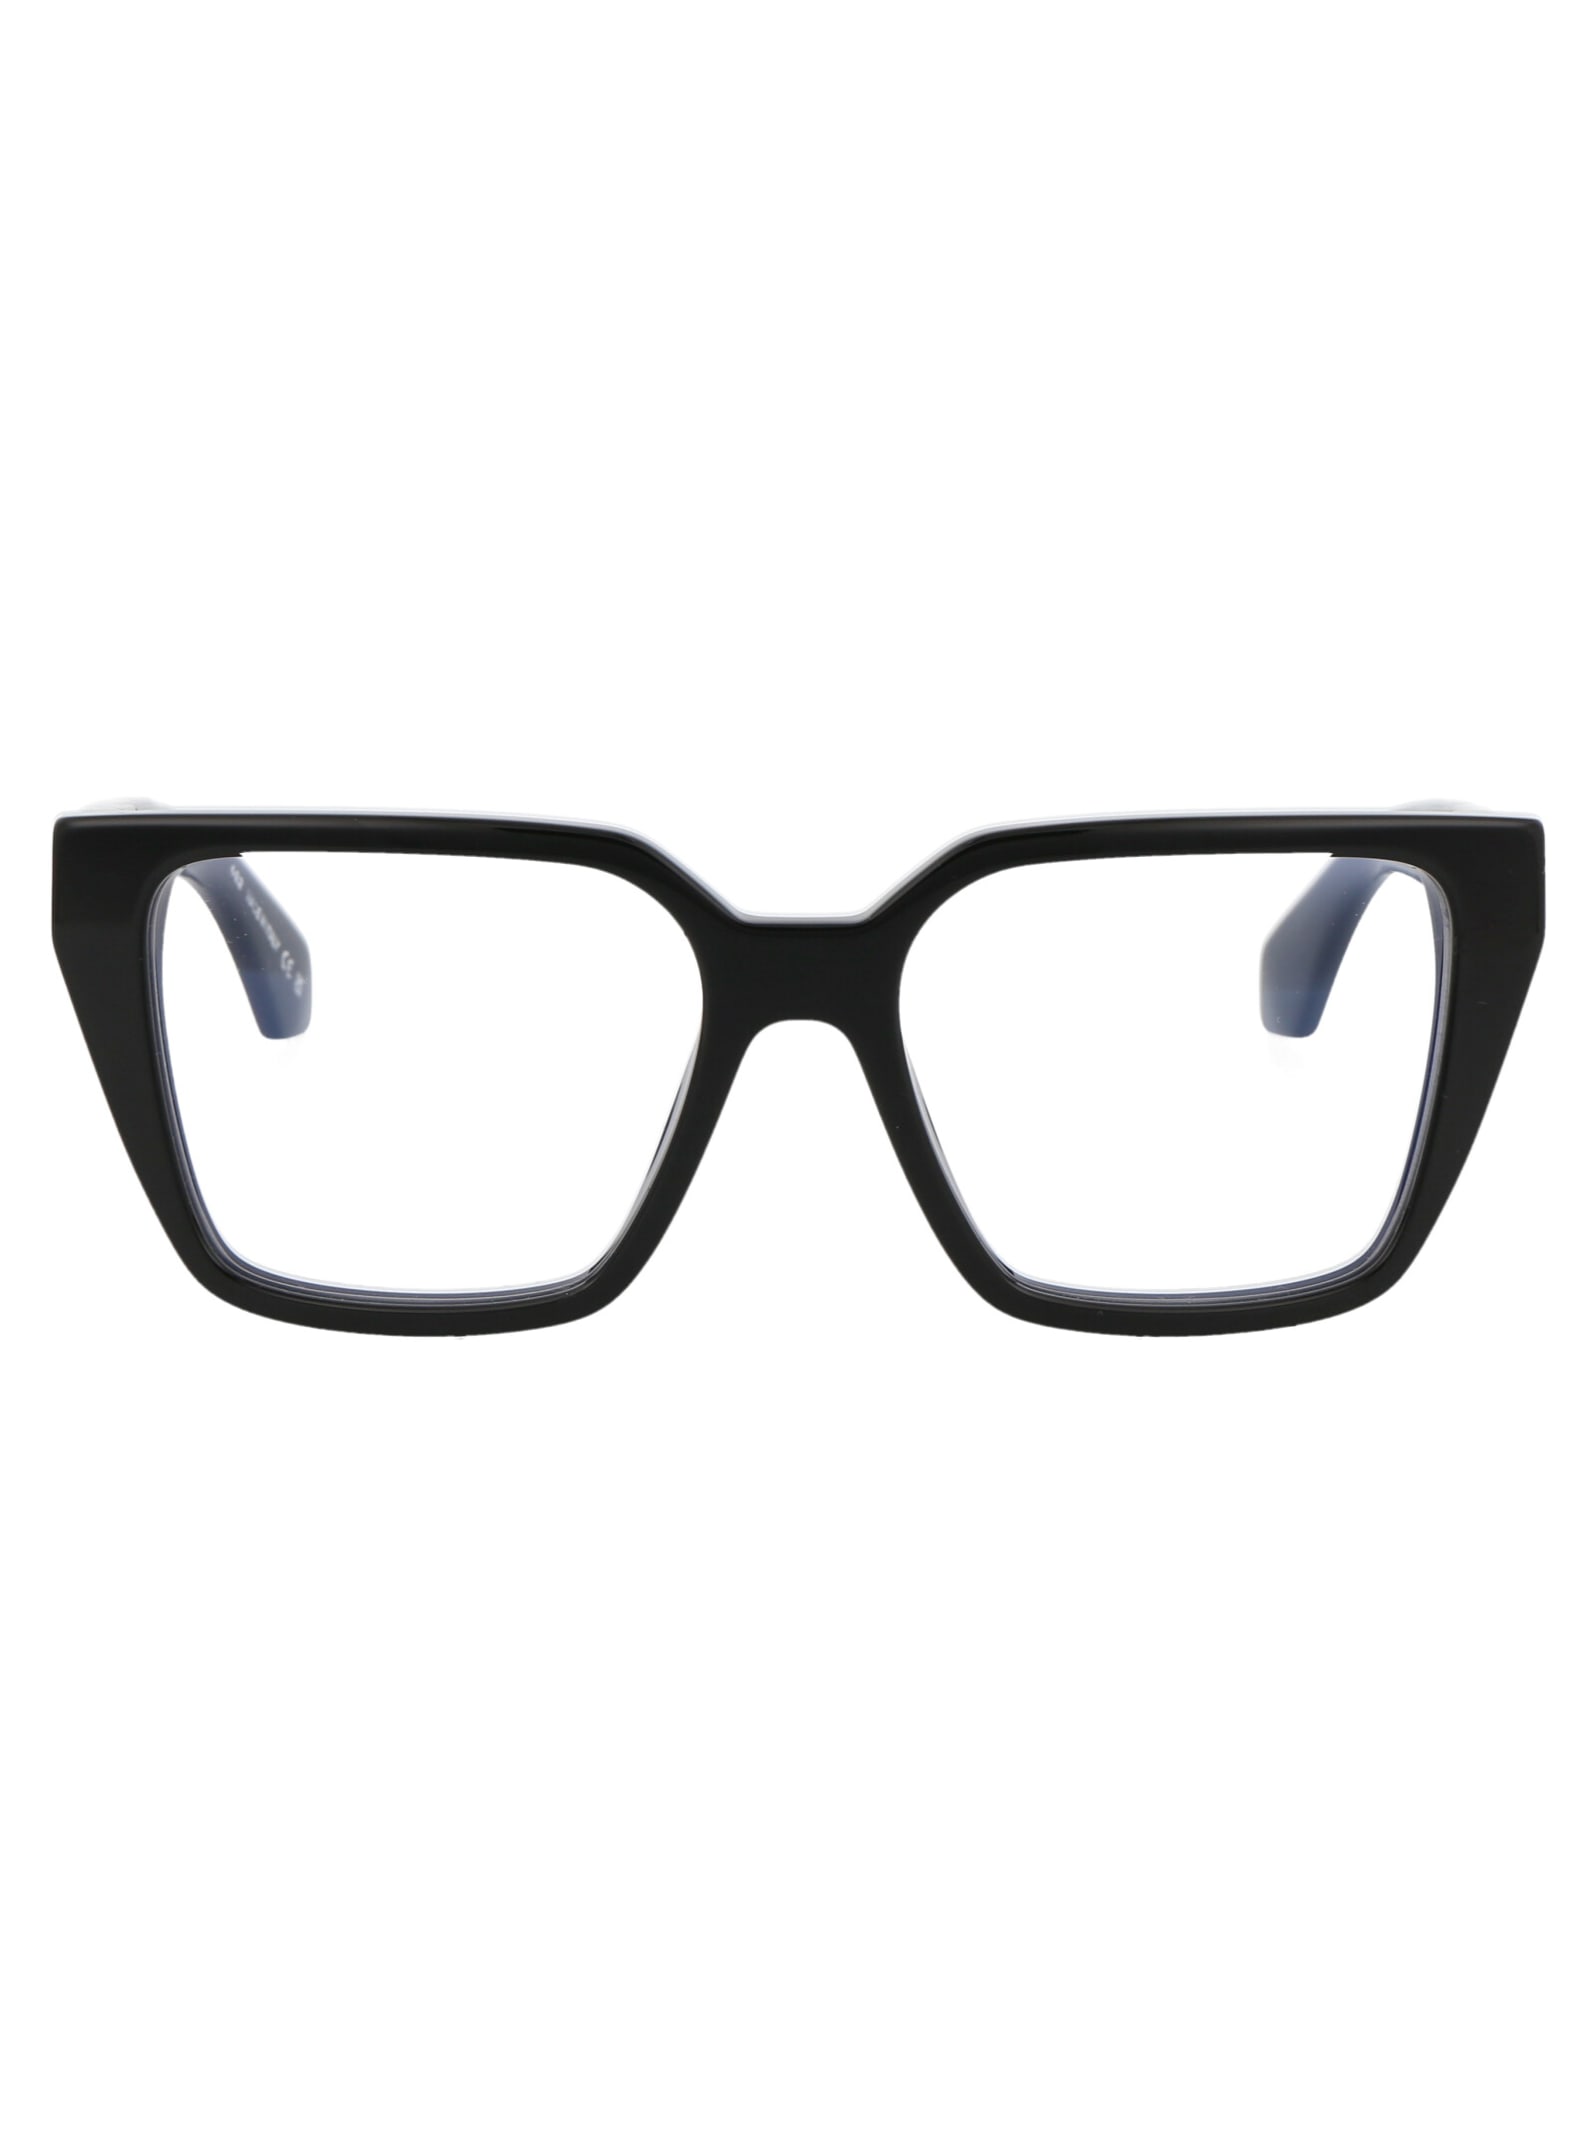 Optical Style 29 Glasses